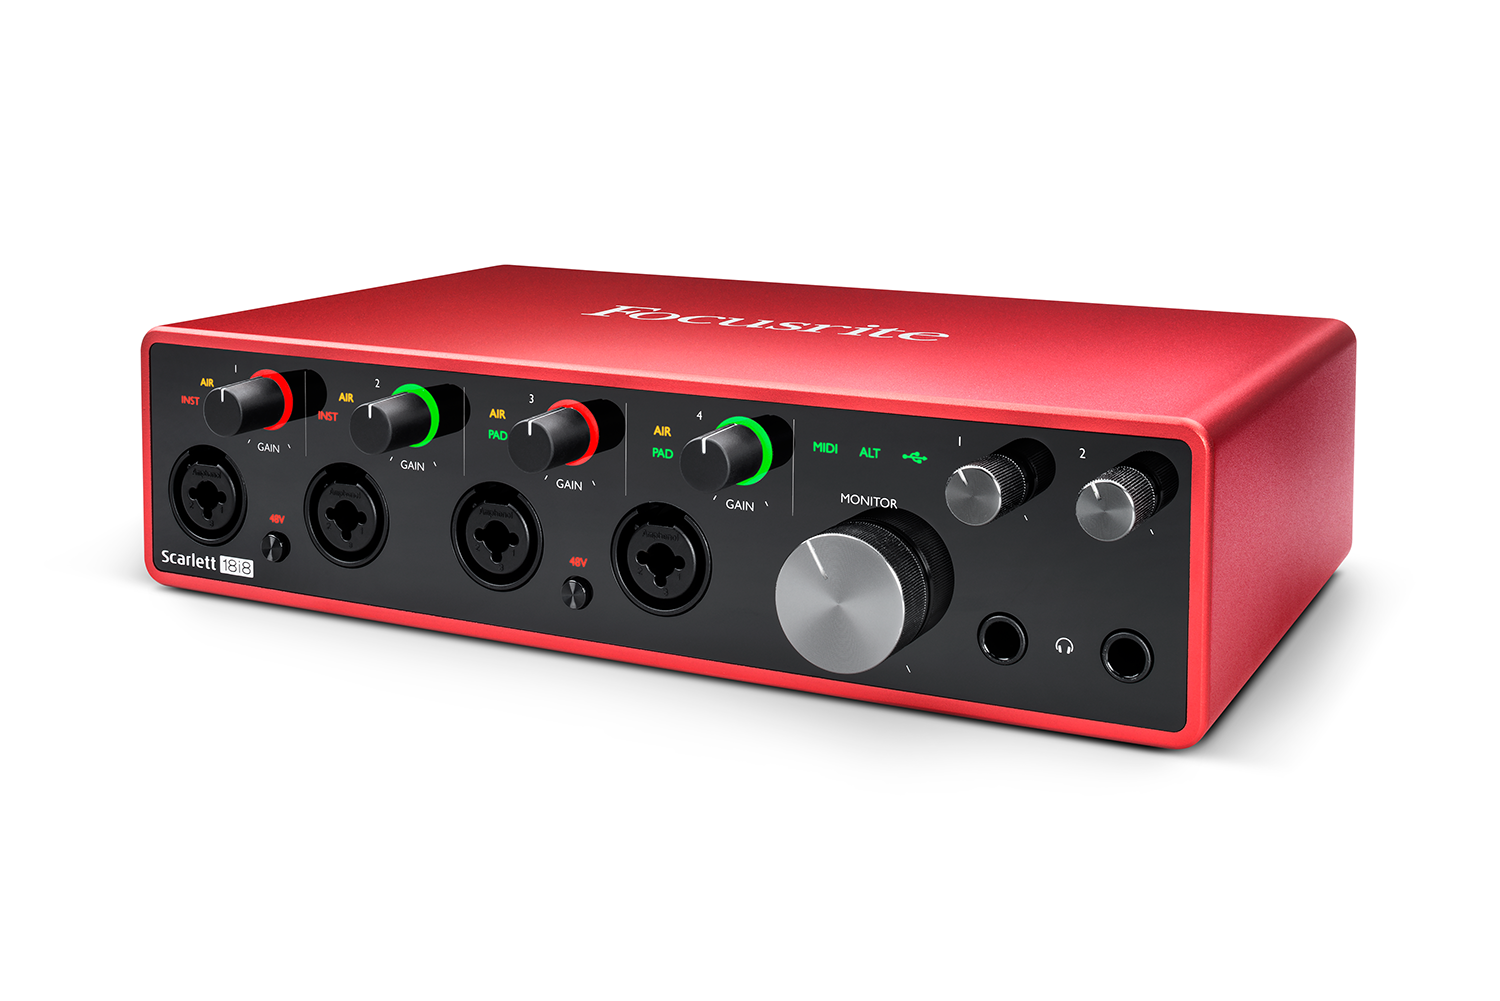 Focusrite Scarlett 18i8 3rd Gen 18-in, 8-out USB Audio Interface - Interfaces - Professional Audio Design, Inc